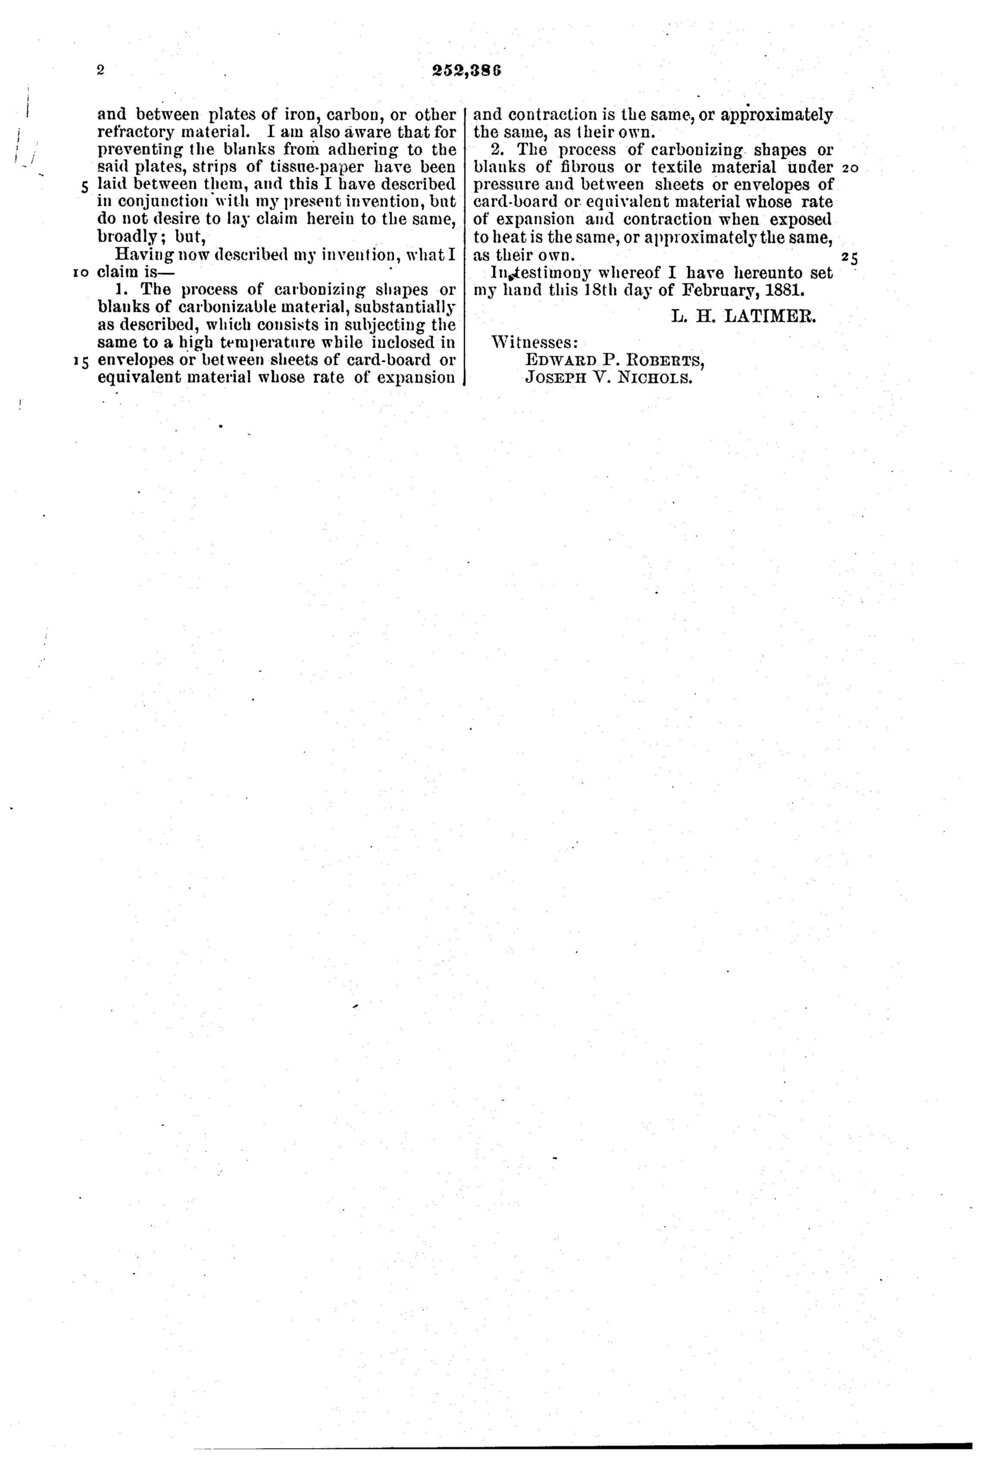 Original patent text (cont.)